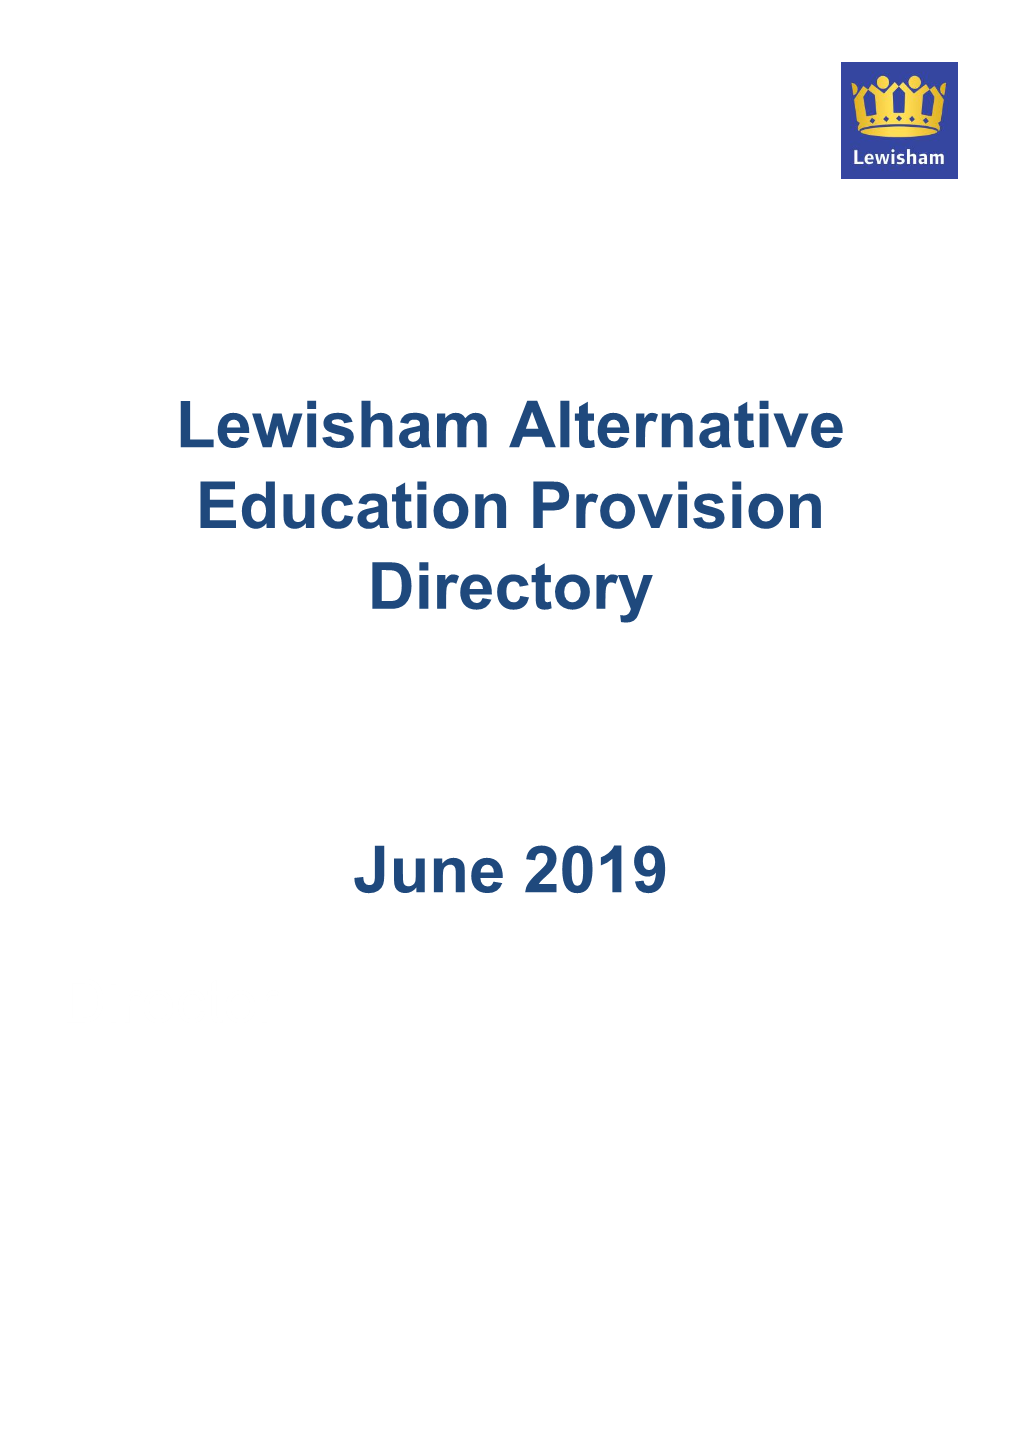 Lewisham Alternative Education Provision Directory June 2019